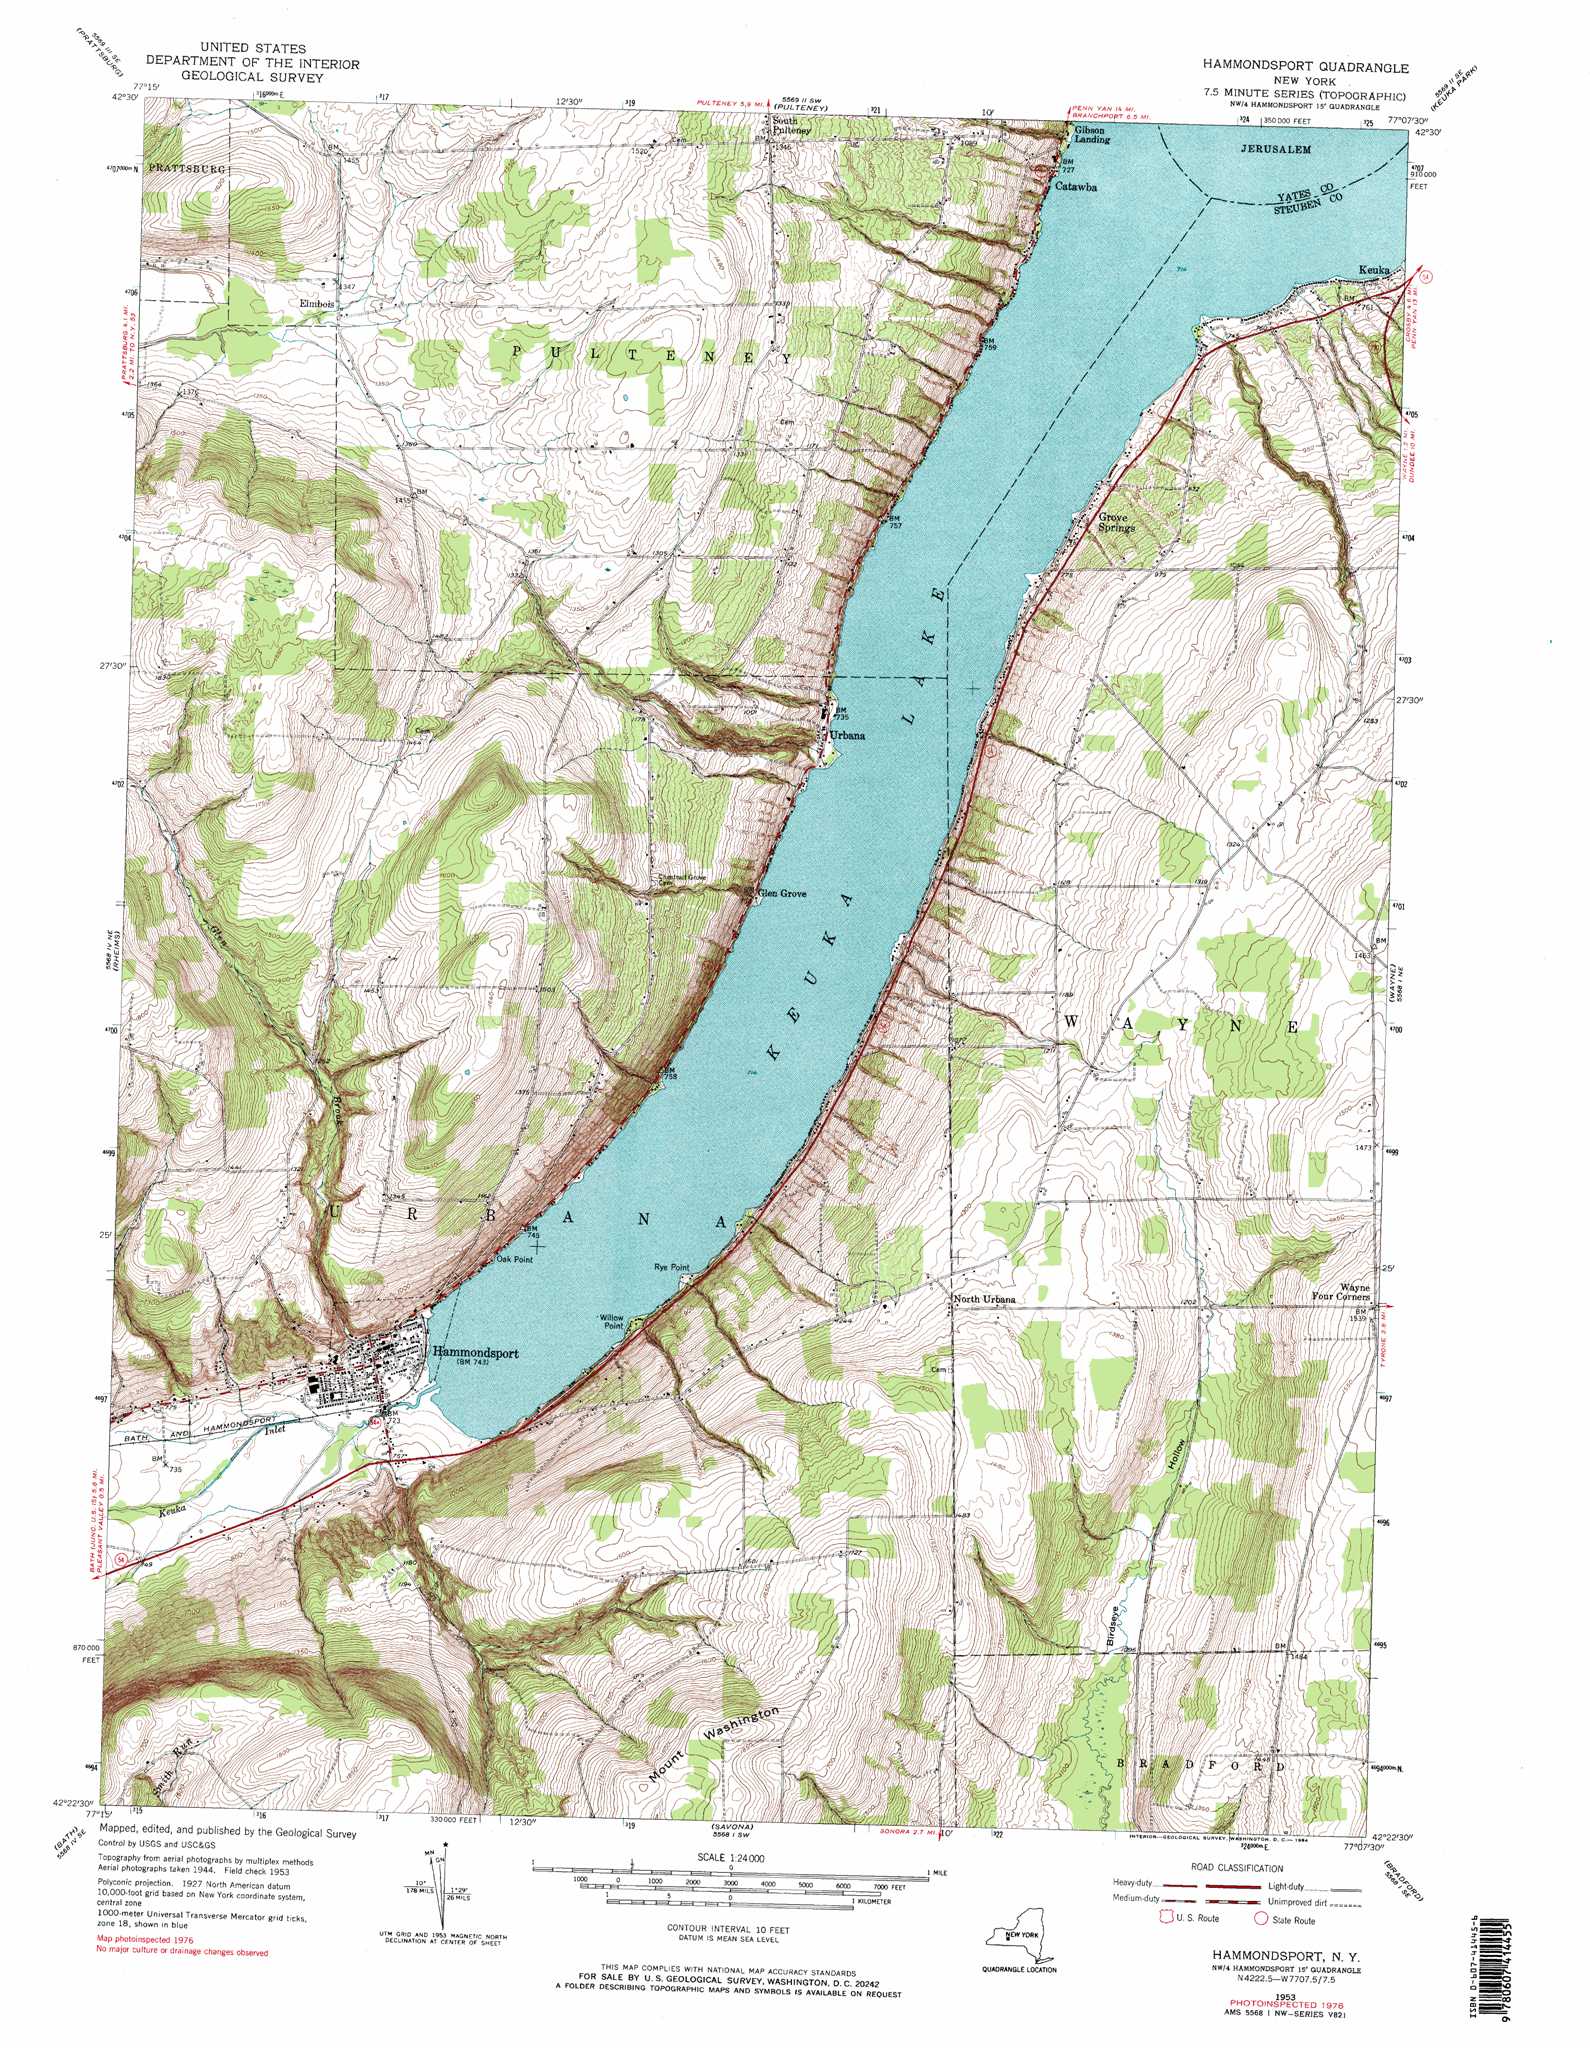 Hammondsport topographic map, NY - USGS Topo Quad 42077d2